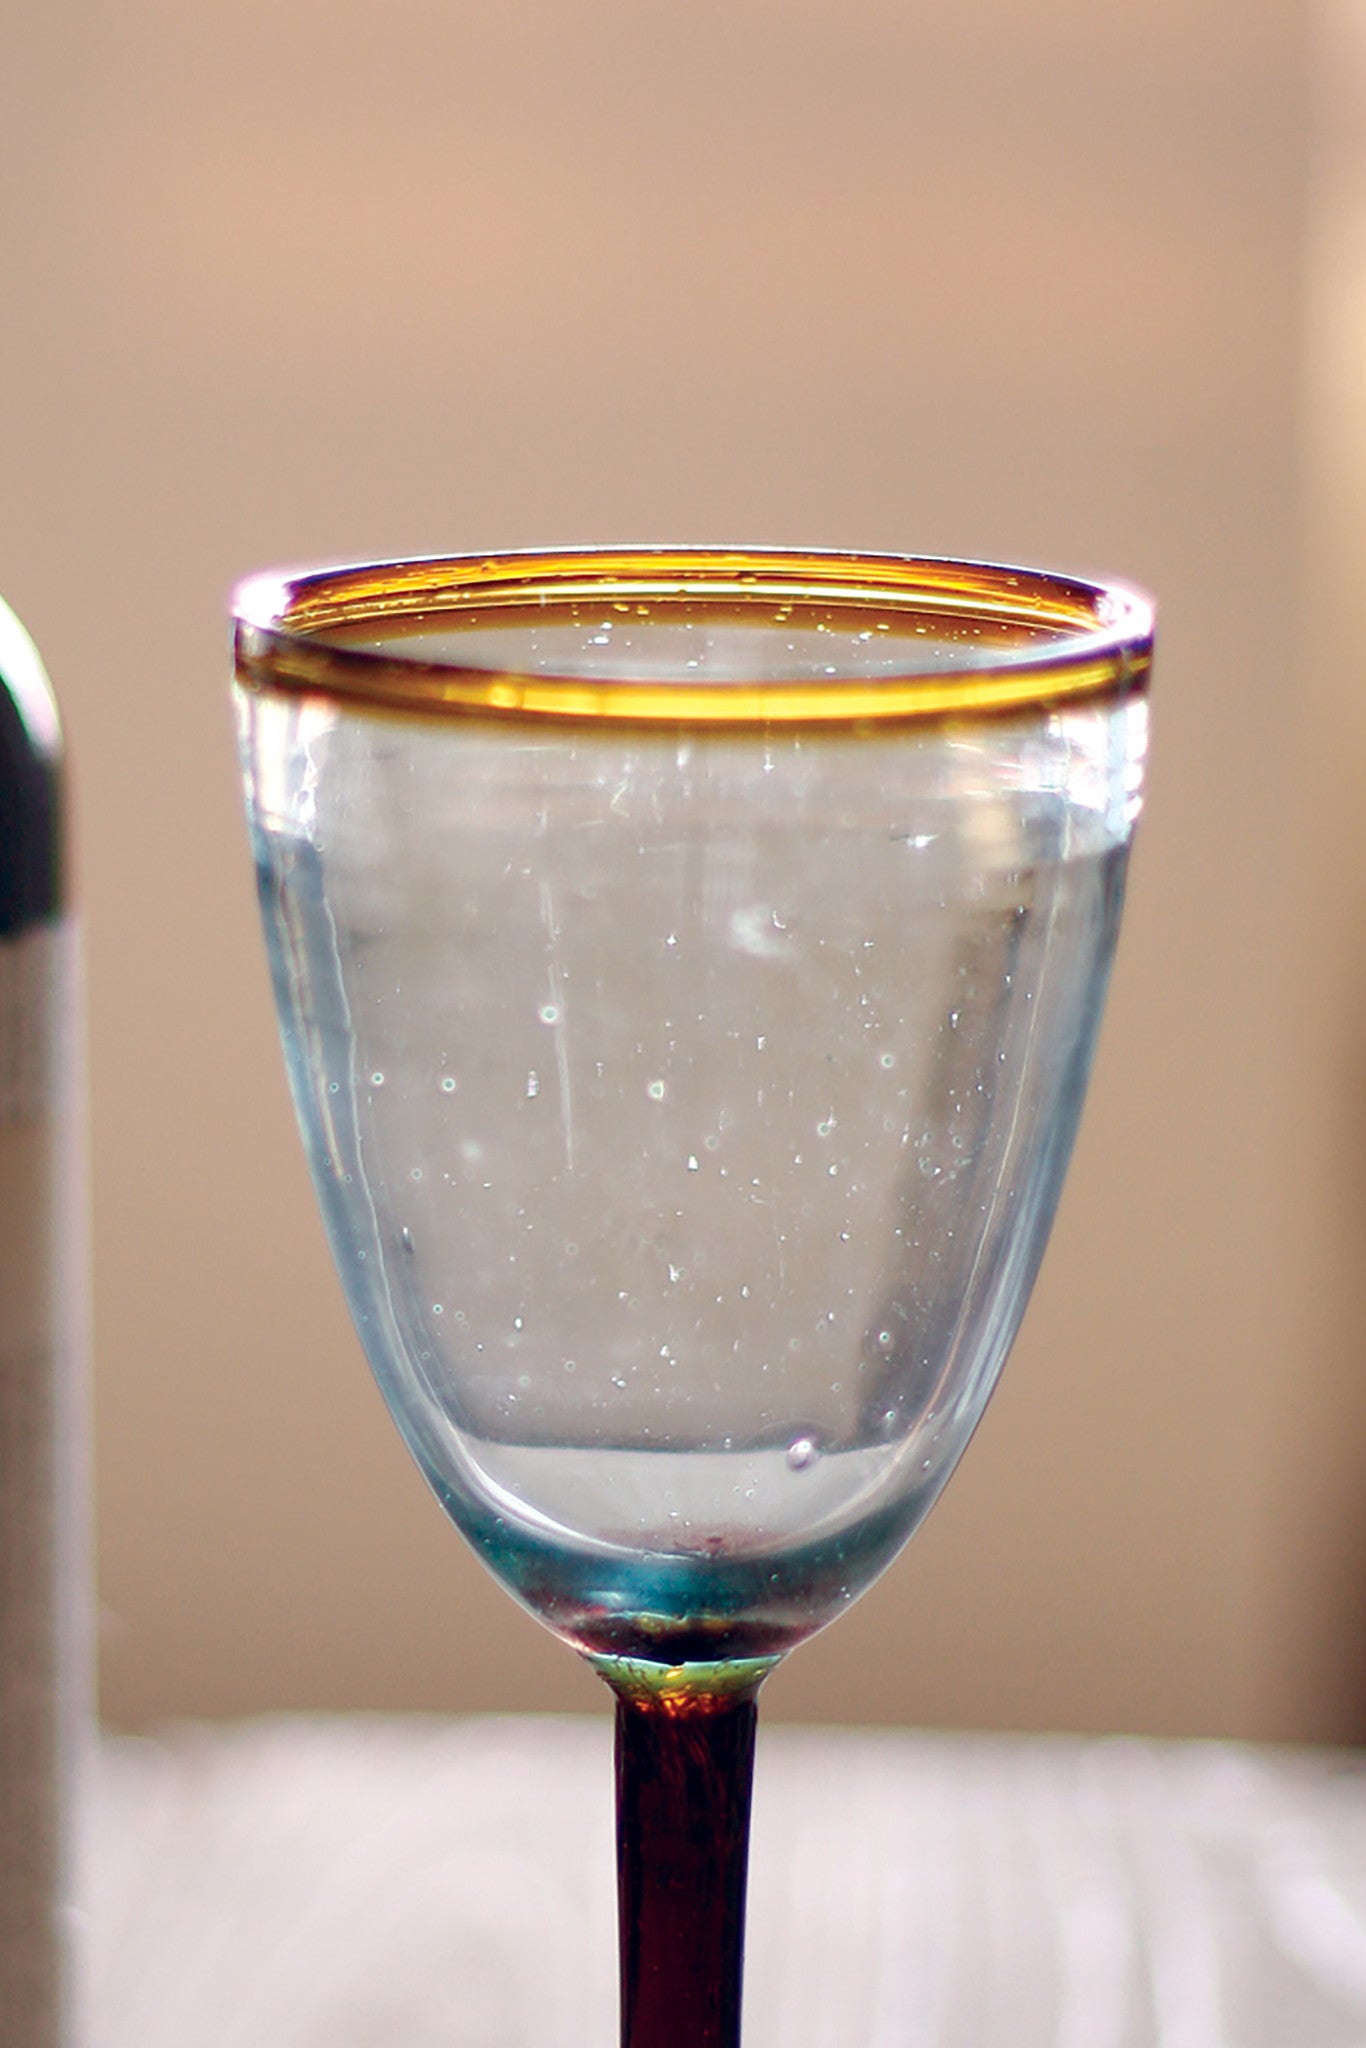 Set 12 Blown Bubble Glass Mid-Century Modern Drinking Glasses